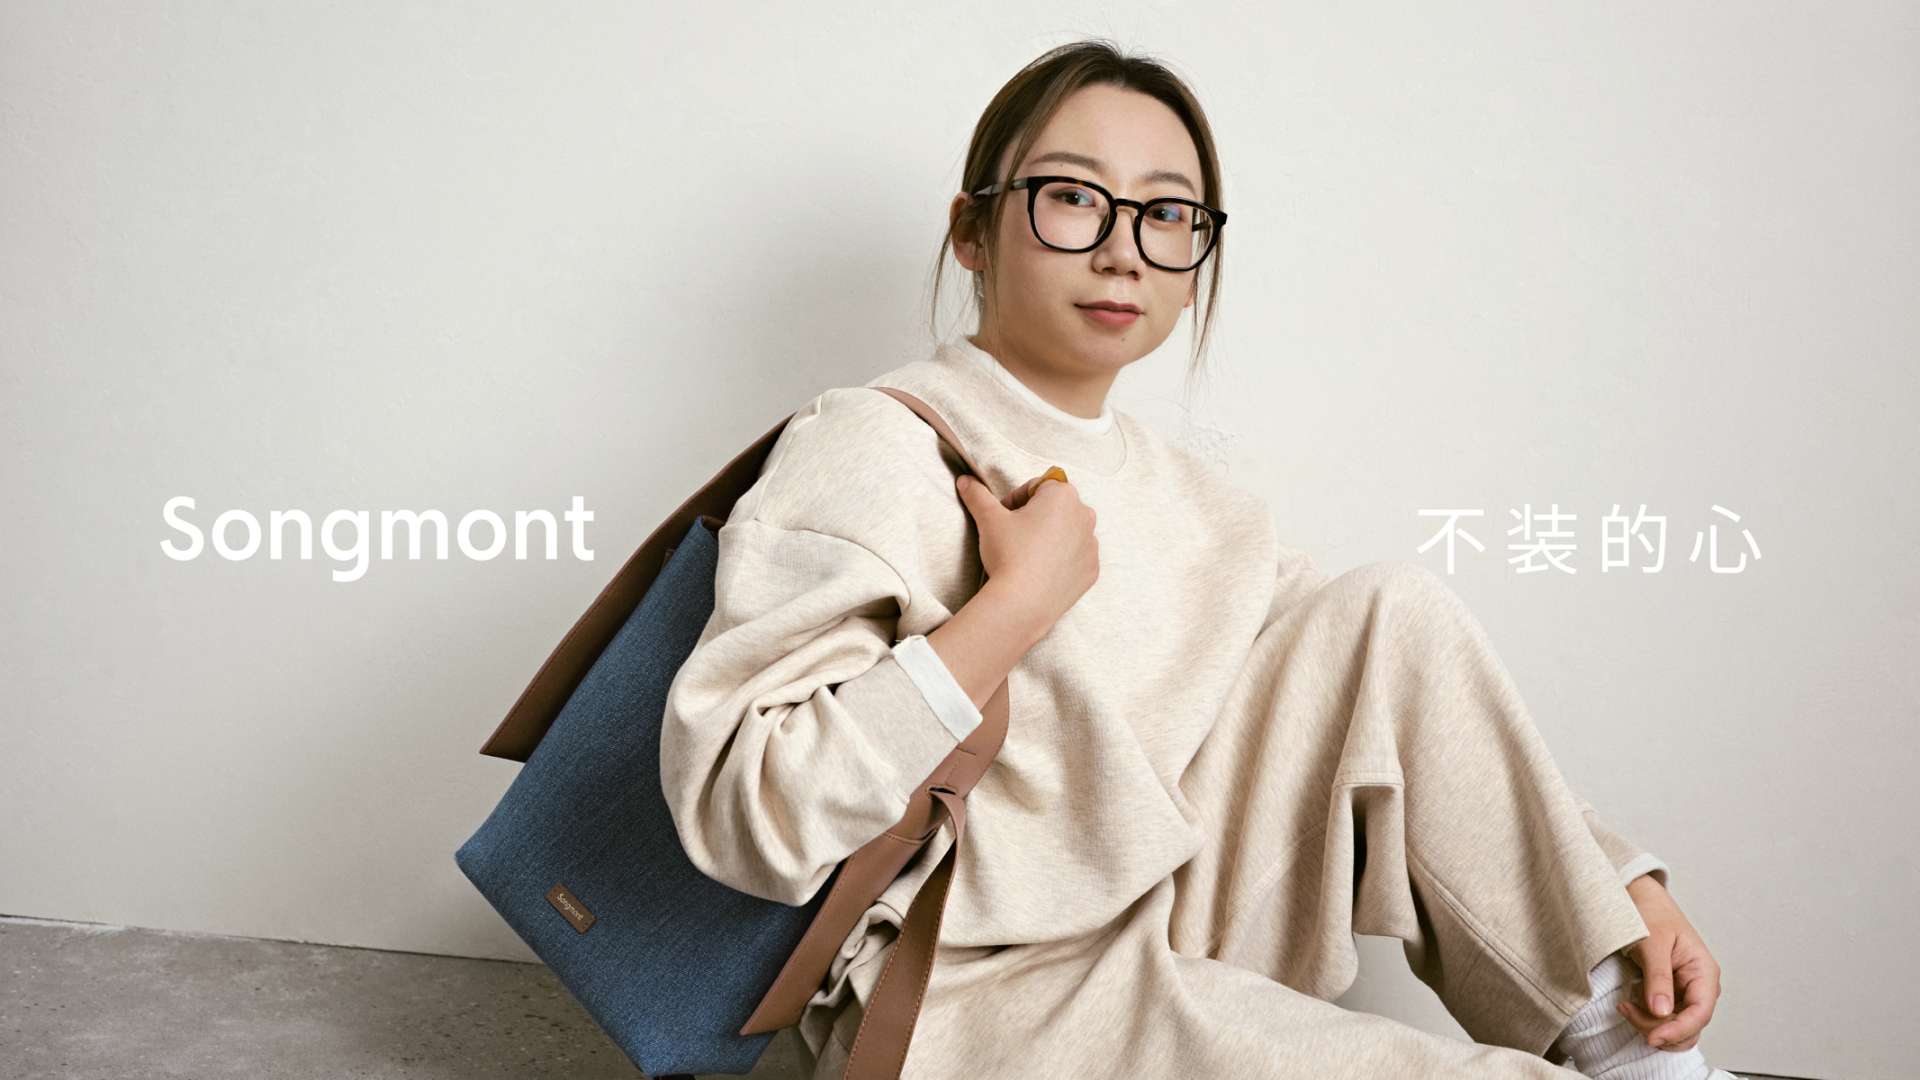 Songmont品牌挚友广告大片|能装的包，不装的心